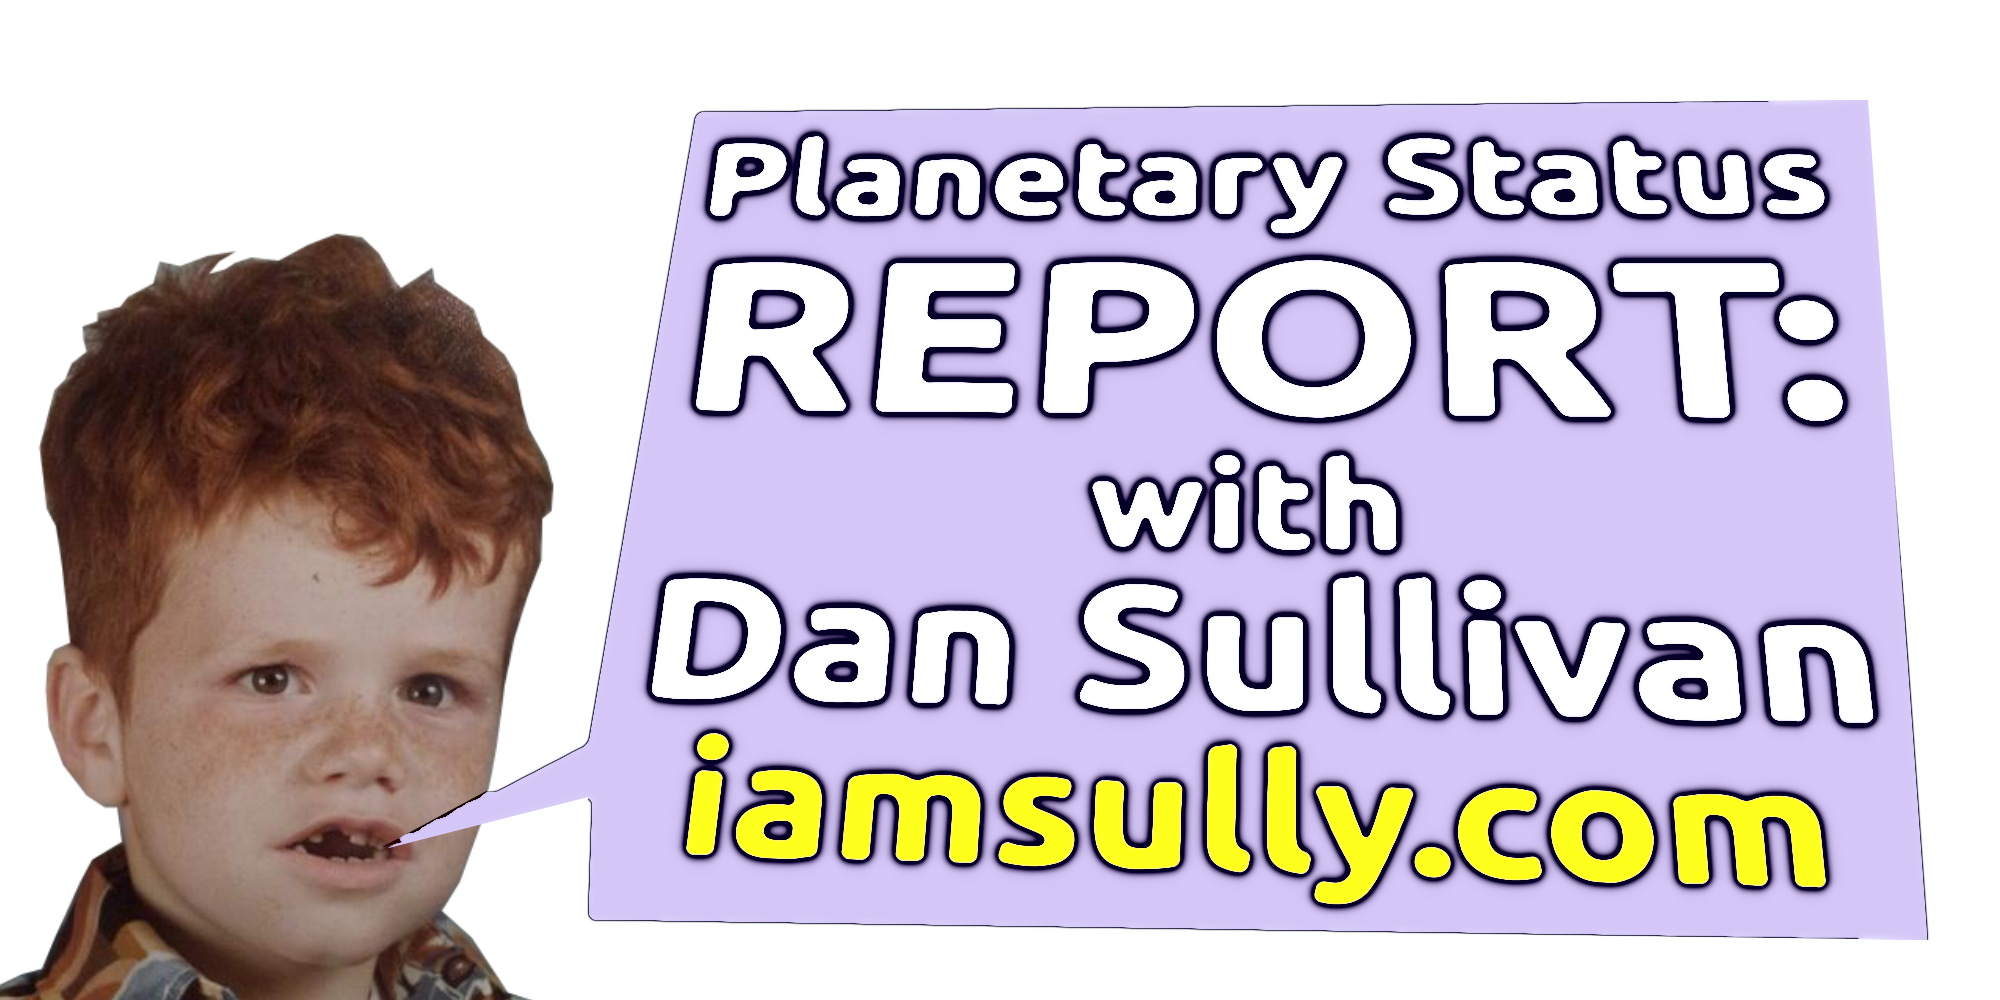 planetary_status_report logo.png